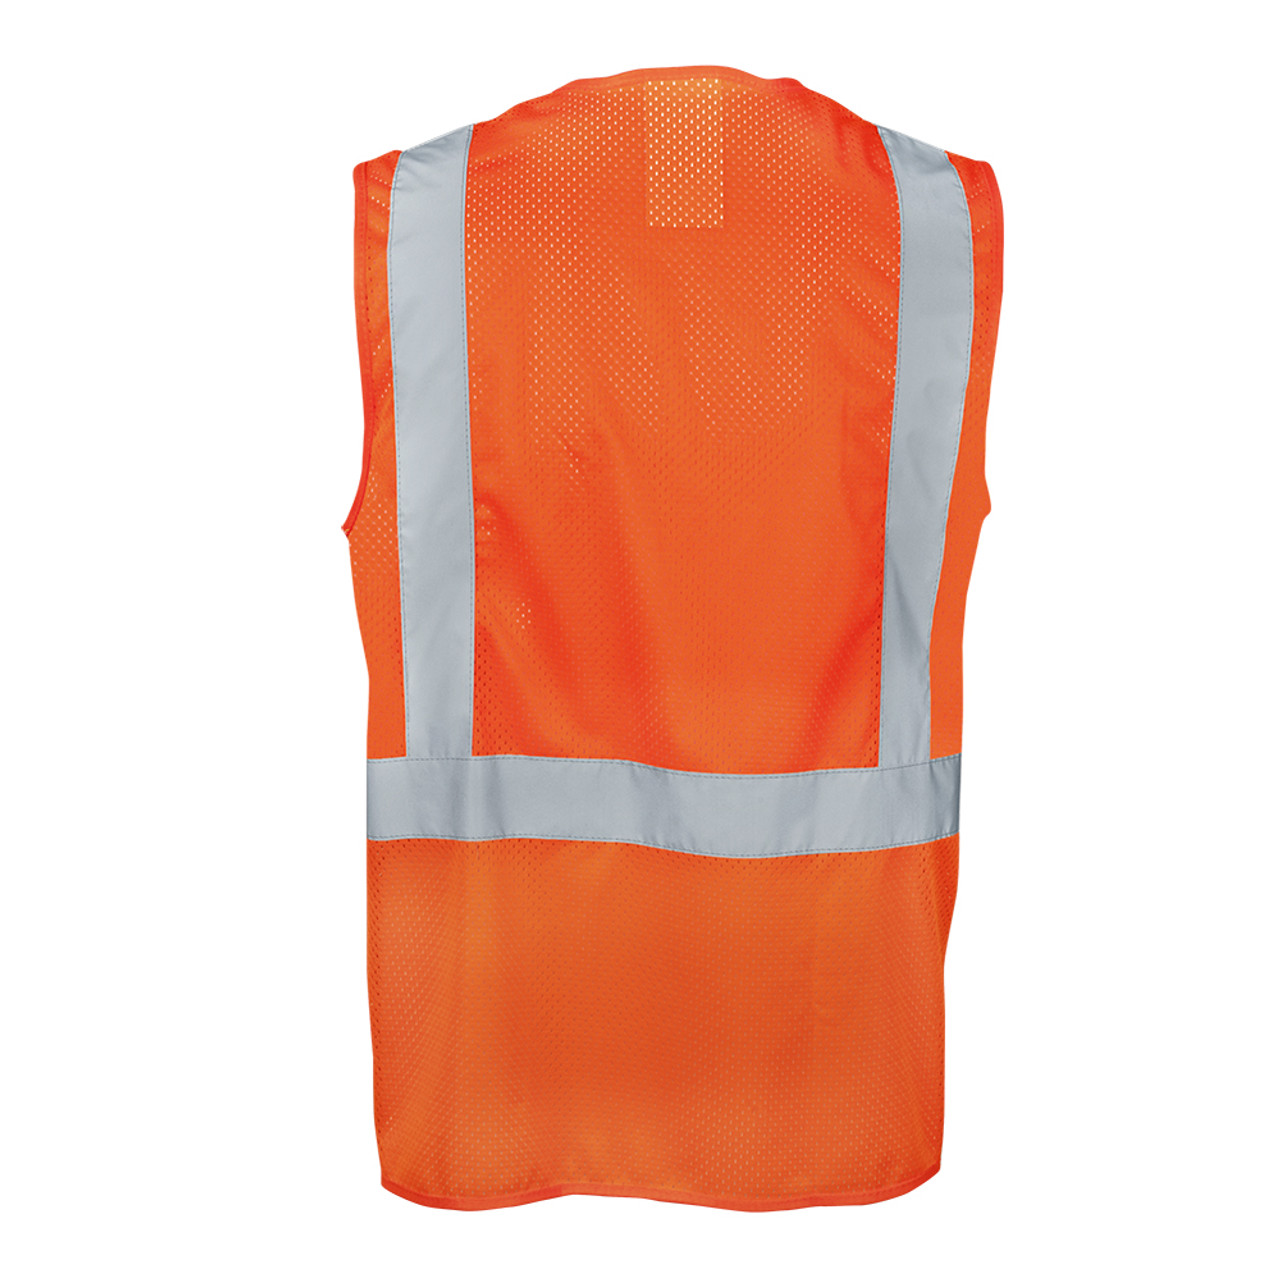 1284-OZ Orange Ironwear Class 2 Safety Vest Size XL 